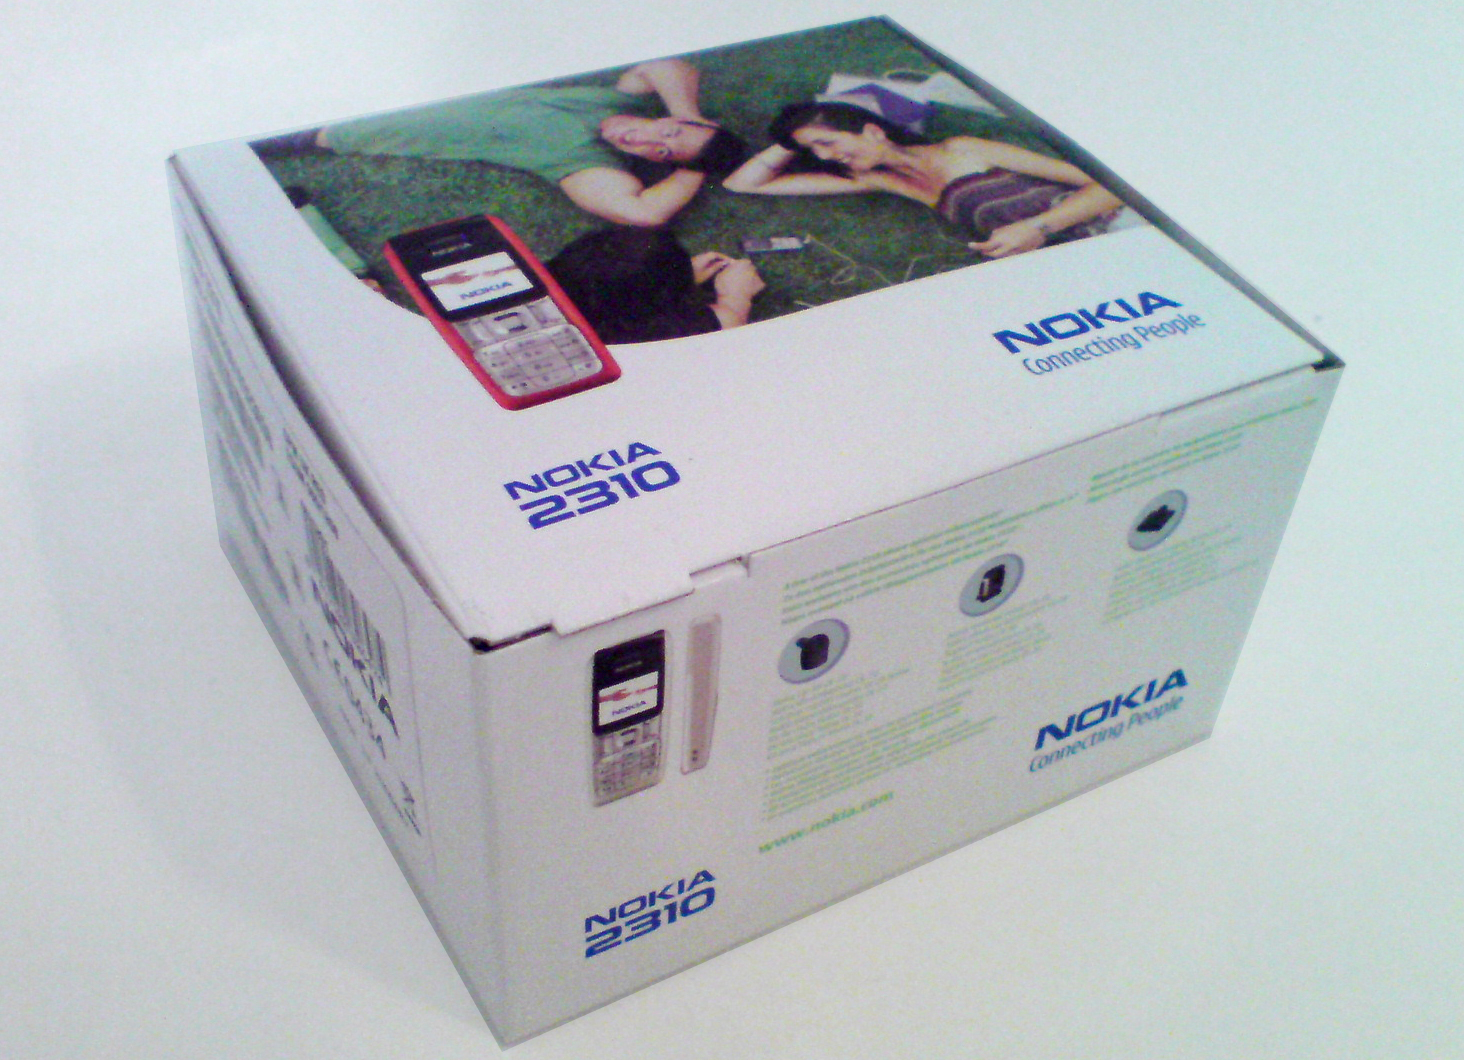 Nokia_box_wiki.jpg